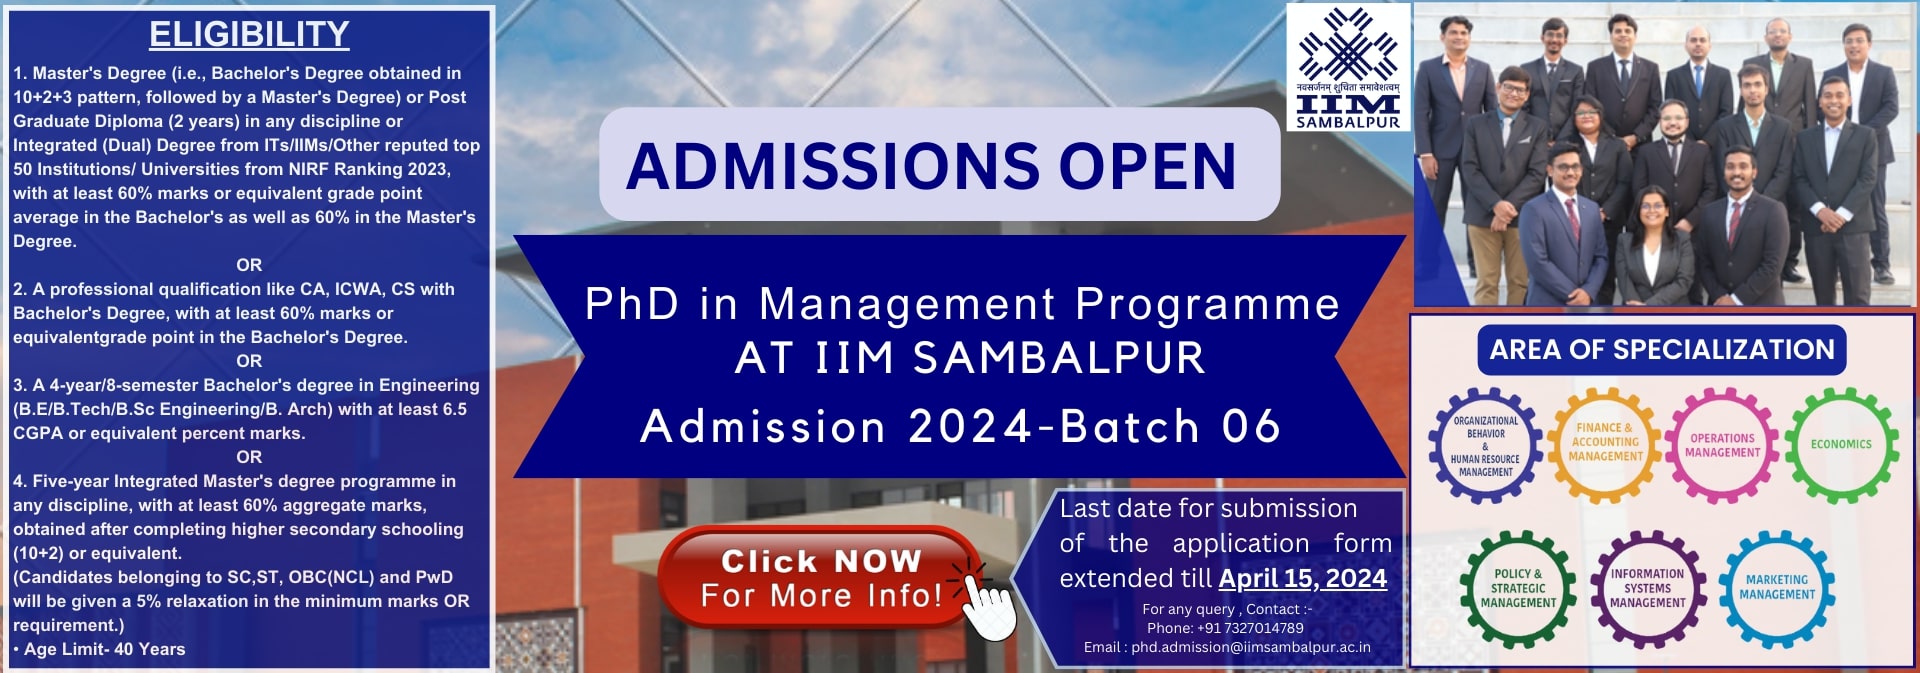 Ph.D. programme at IIM Sambalpur (1)